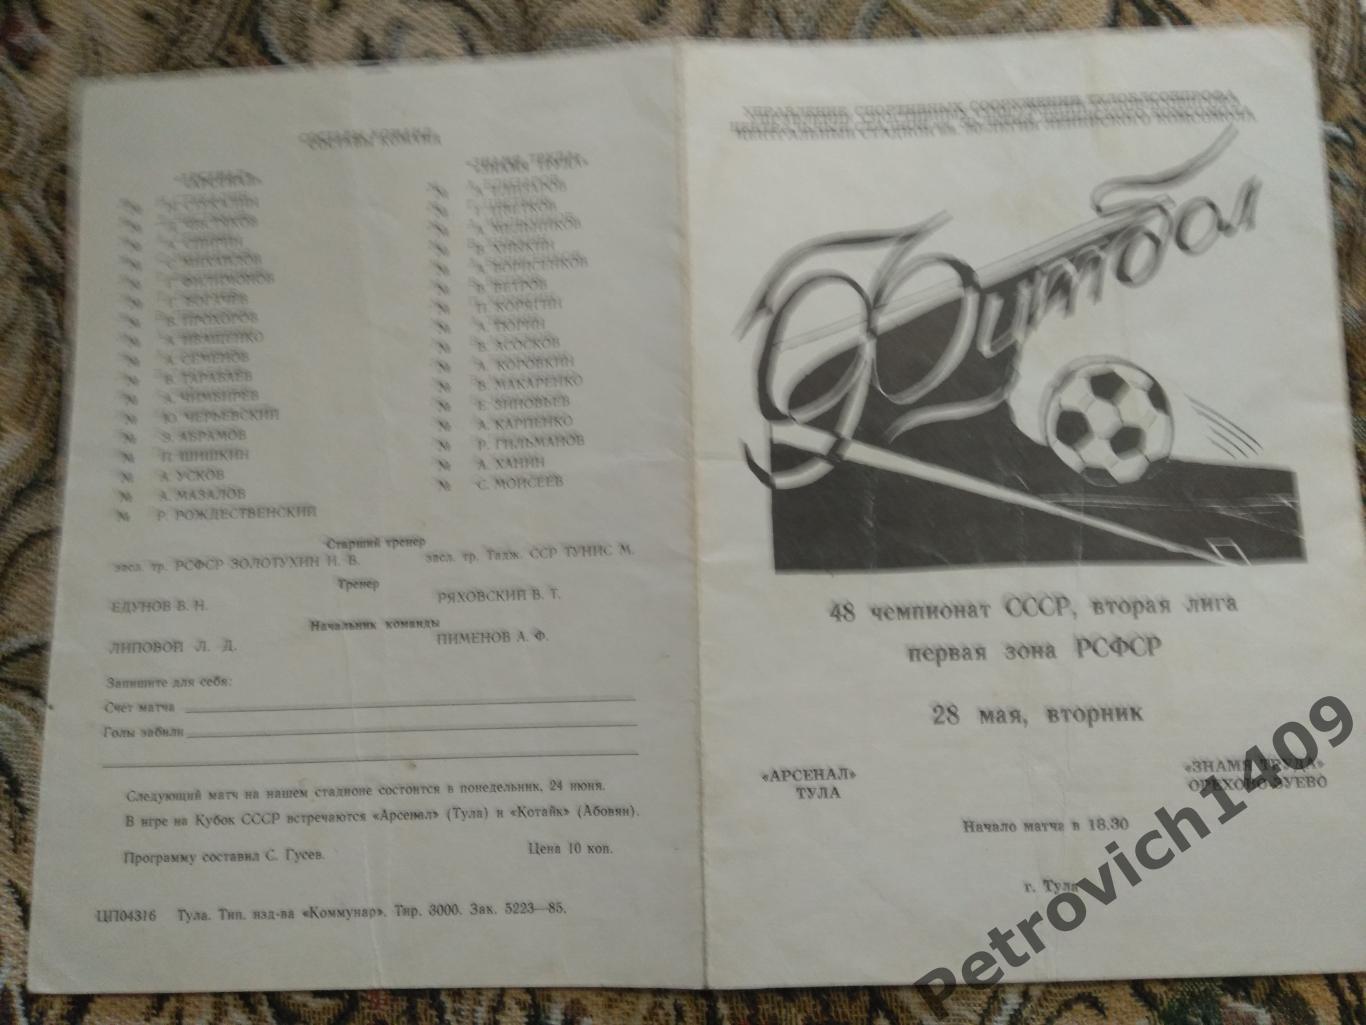 Арсенал Тула - Знамя Труда Орехово-Зуево 28 мая 1985 год